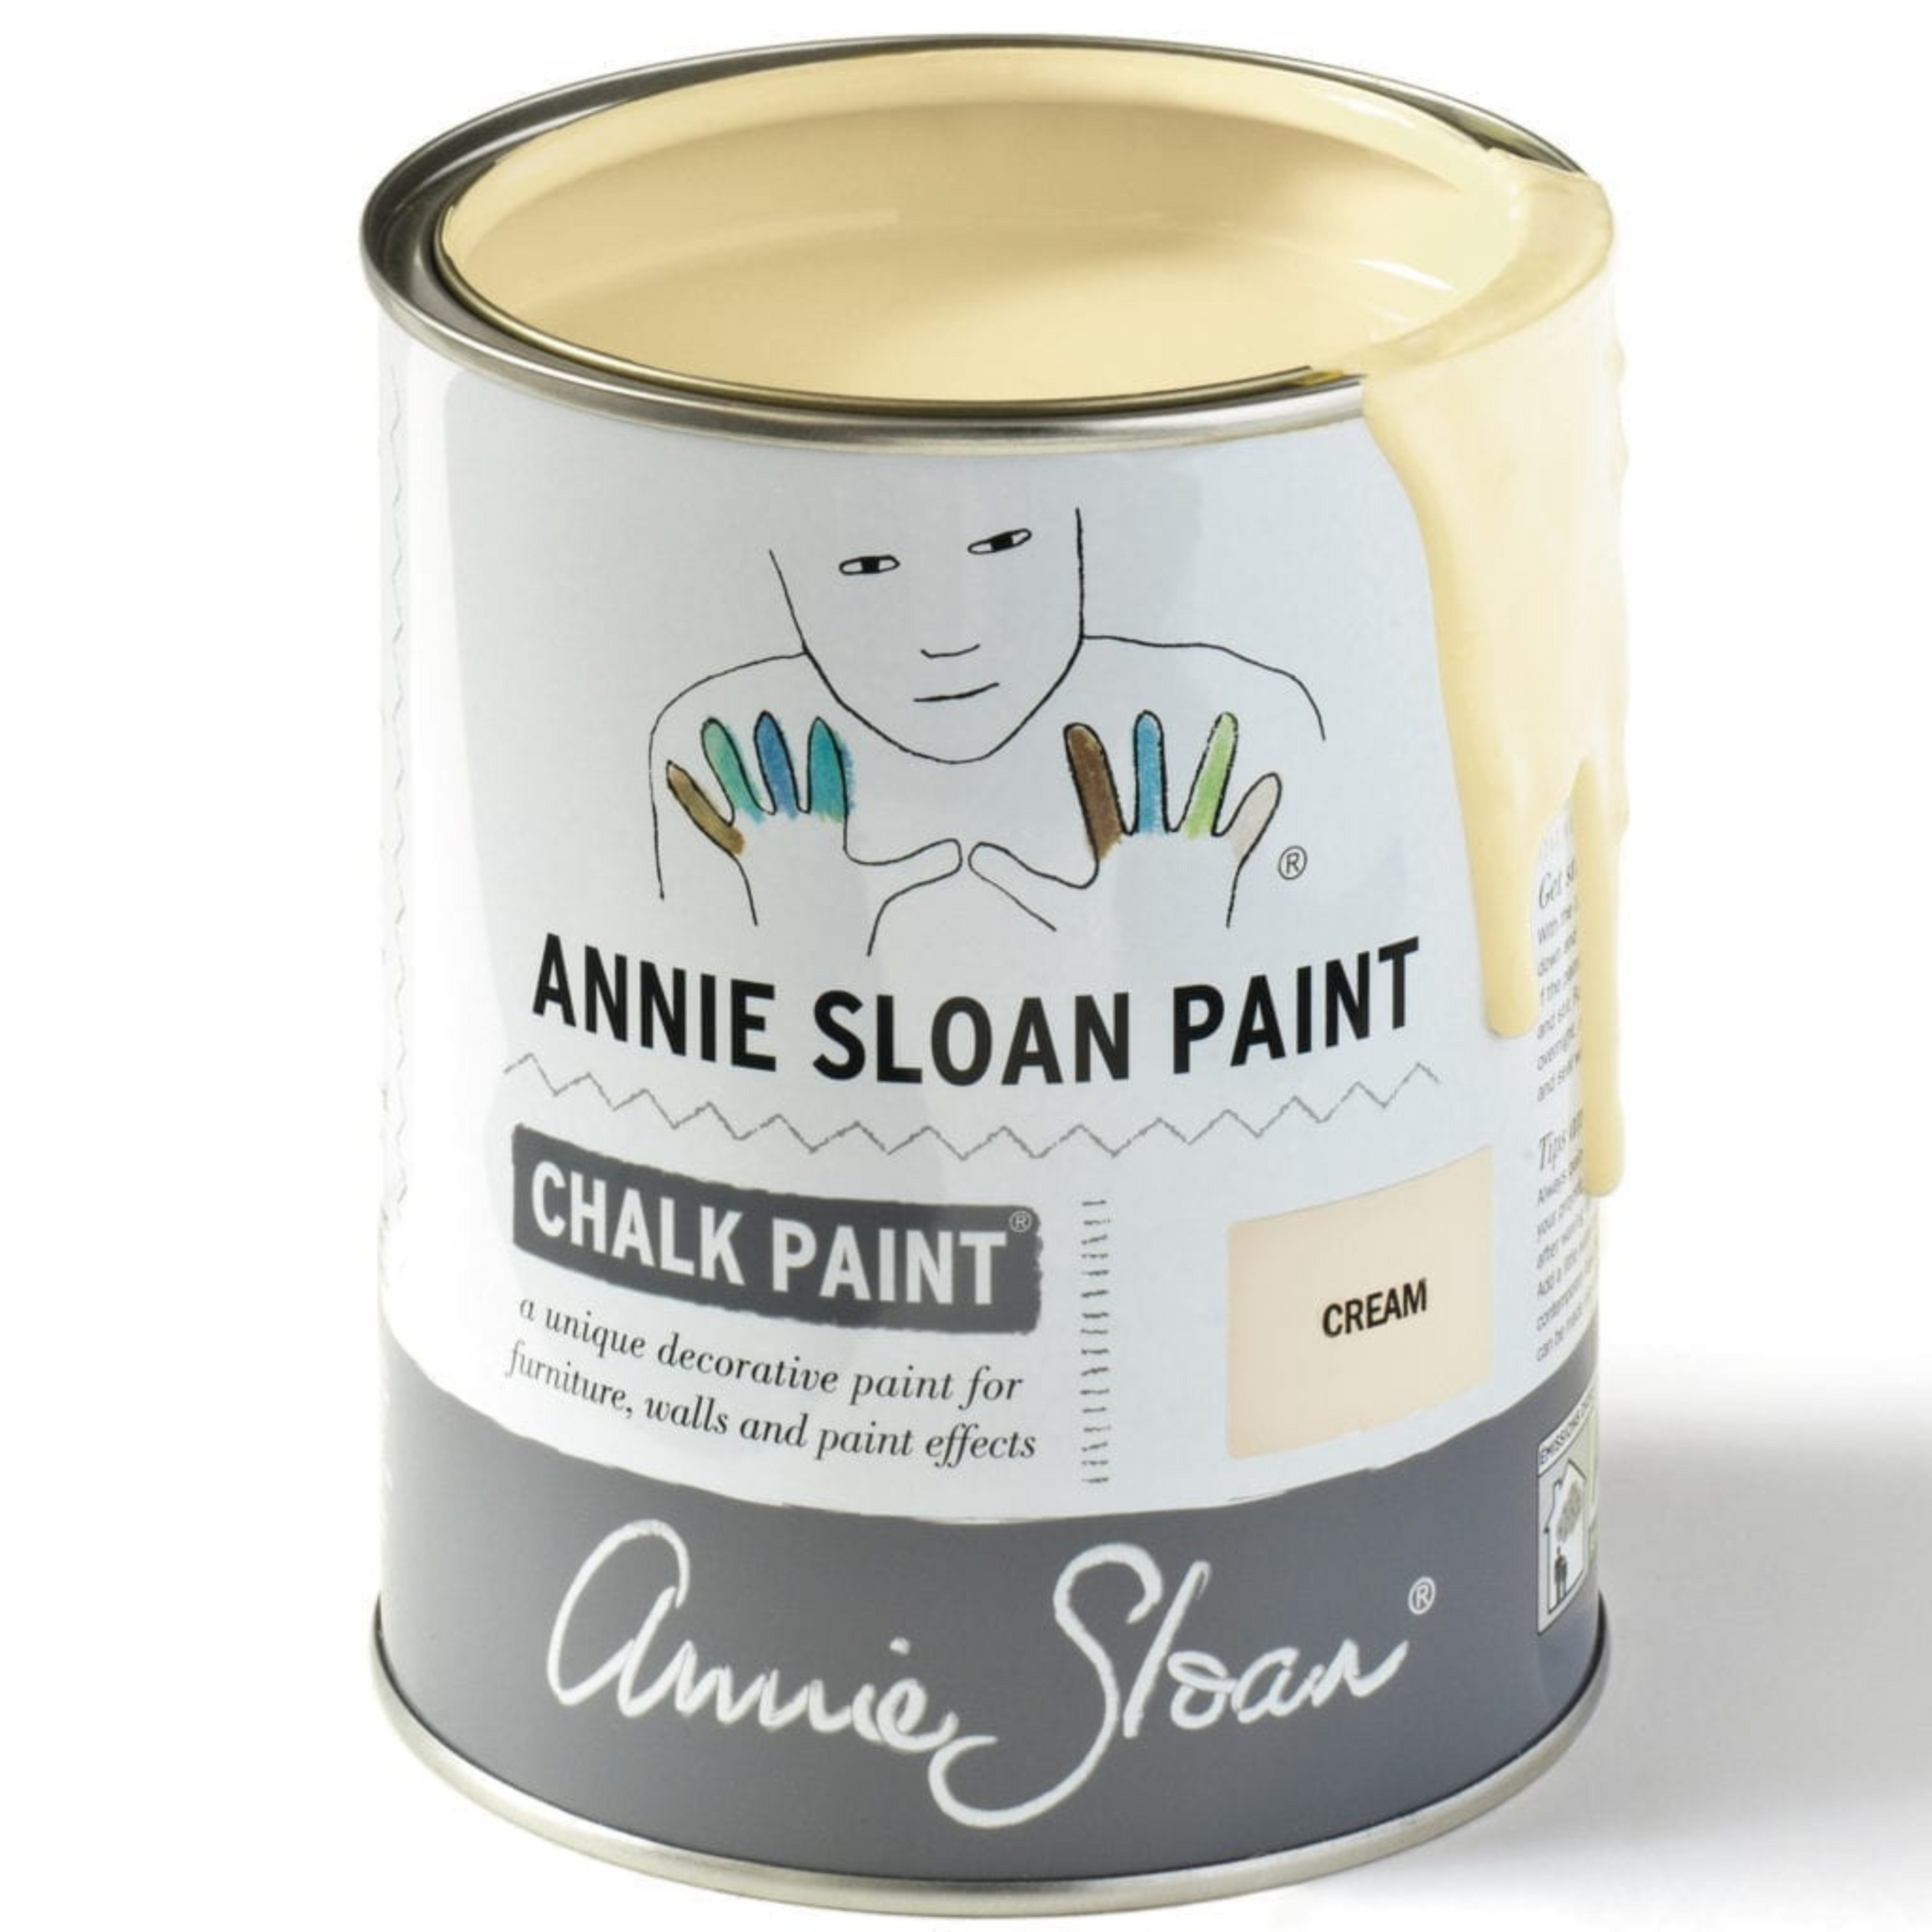 Can of Cream Annie Sloan Chalk Paint.